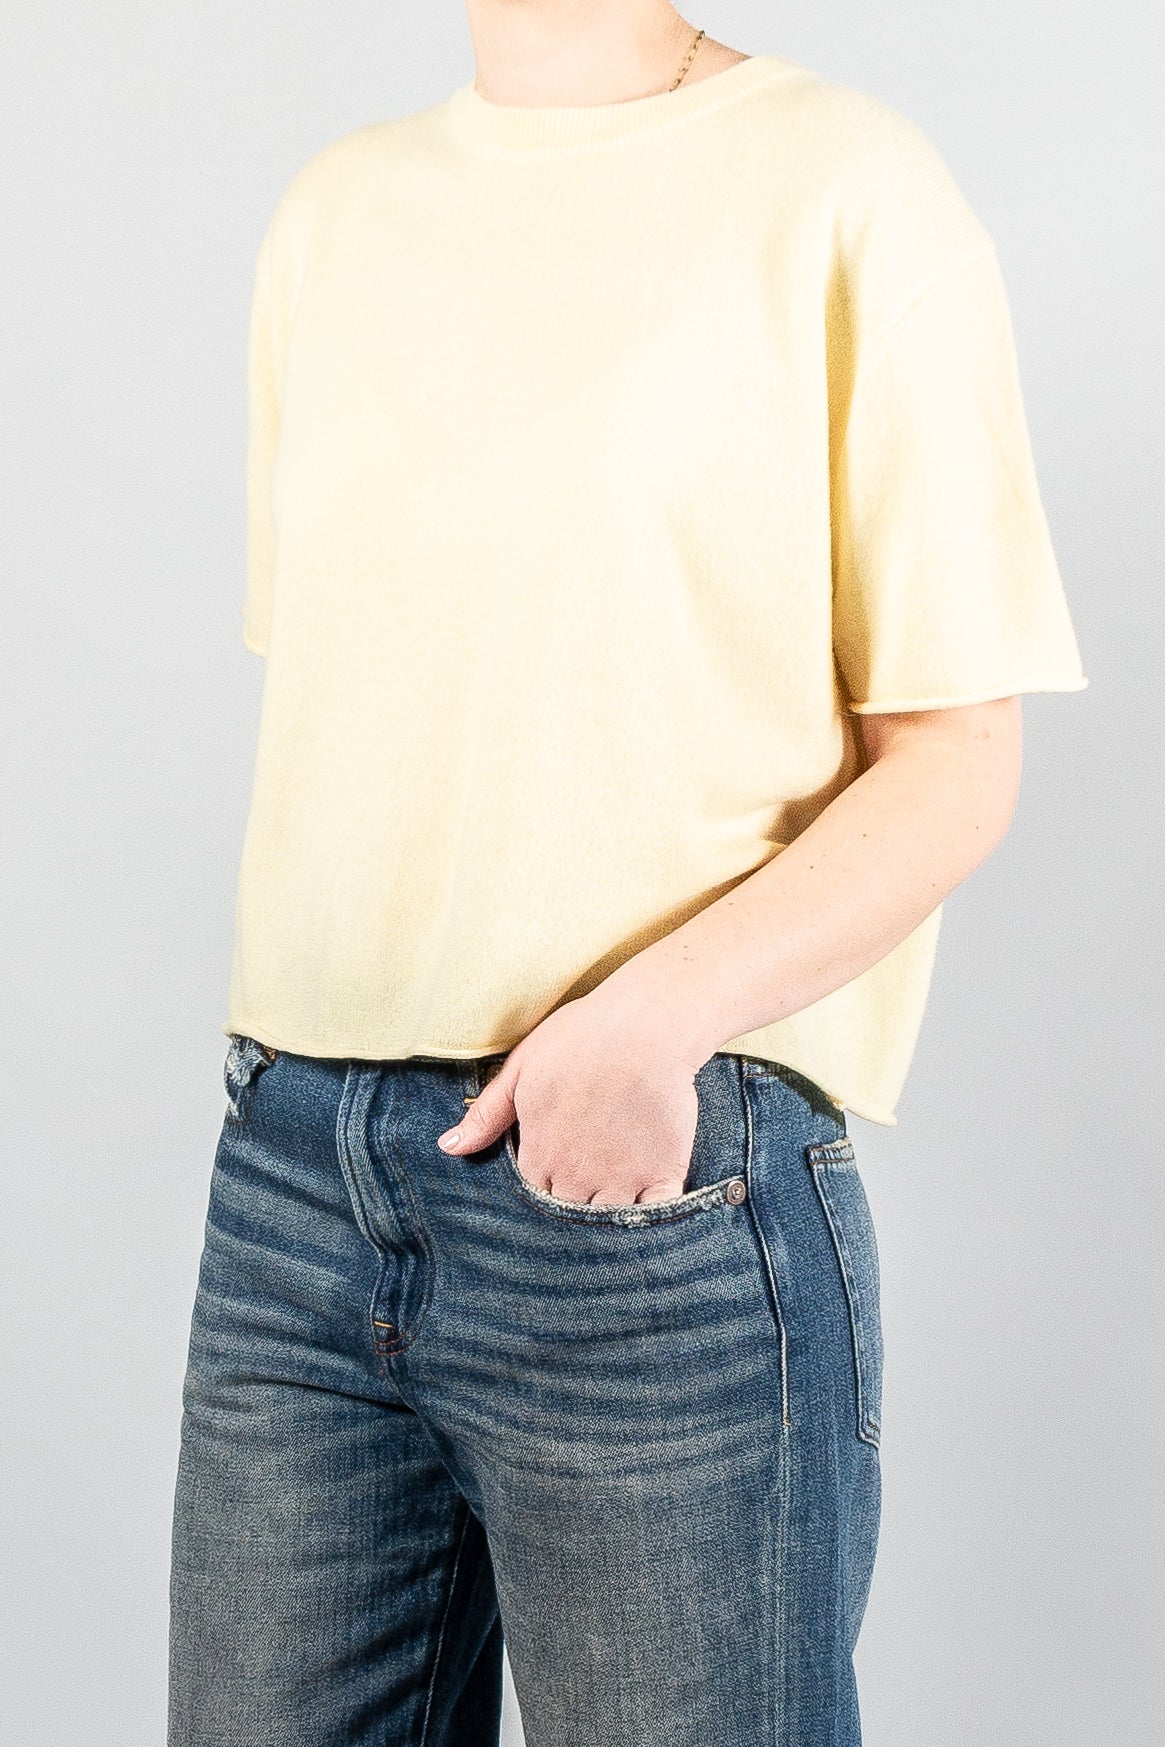 Lisa Yang Cila T-Shirt-Tops-Misch-Boutique-Vancouver-Canada-misch.ca